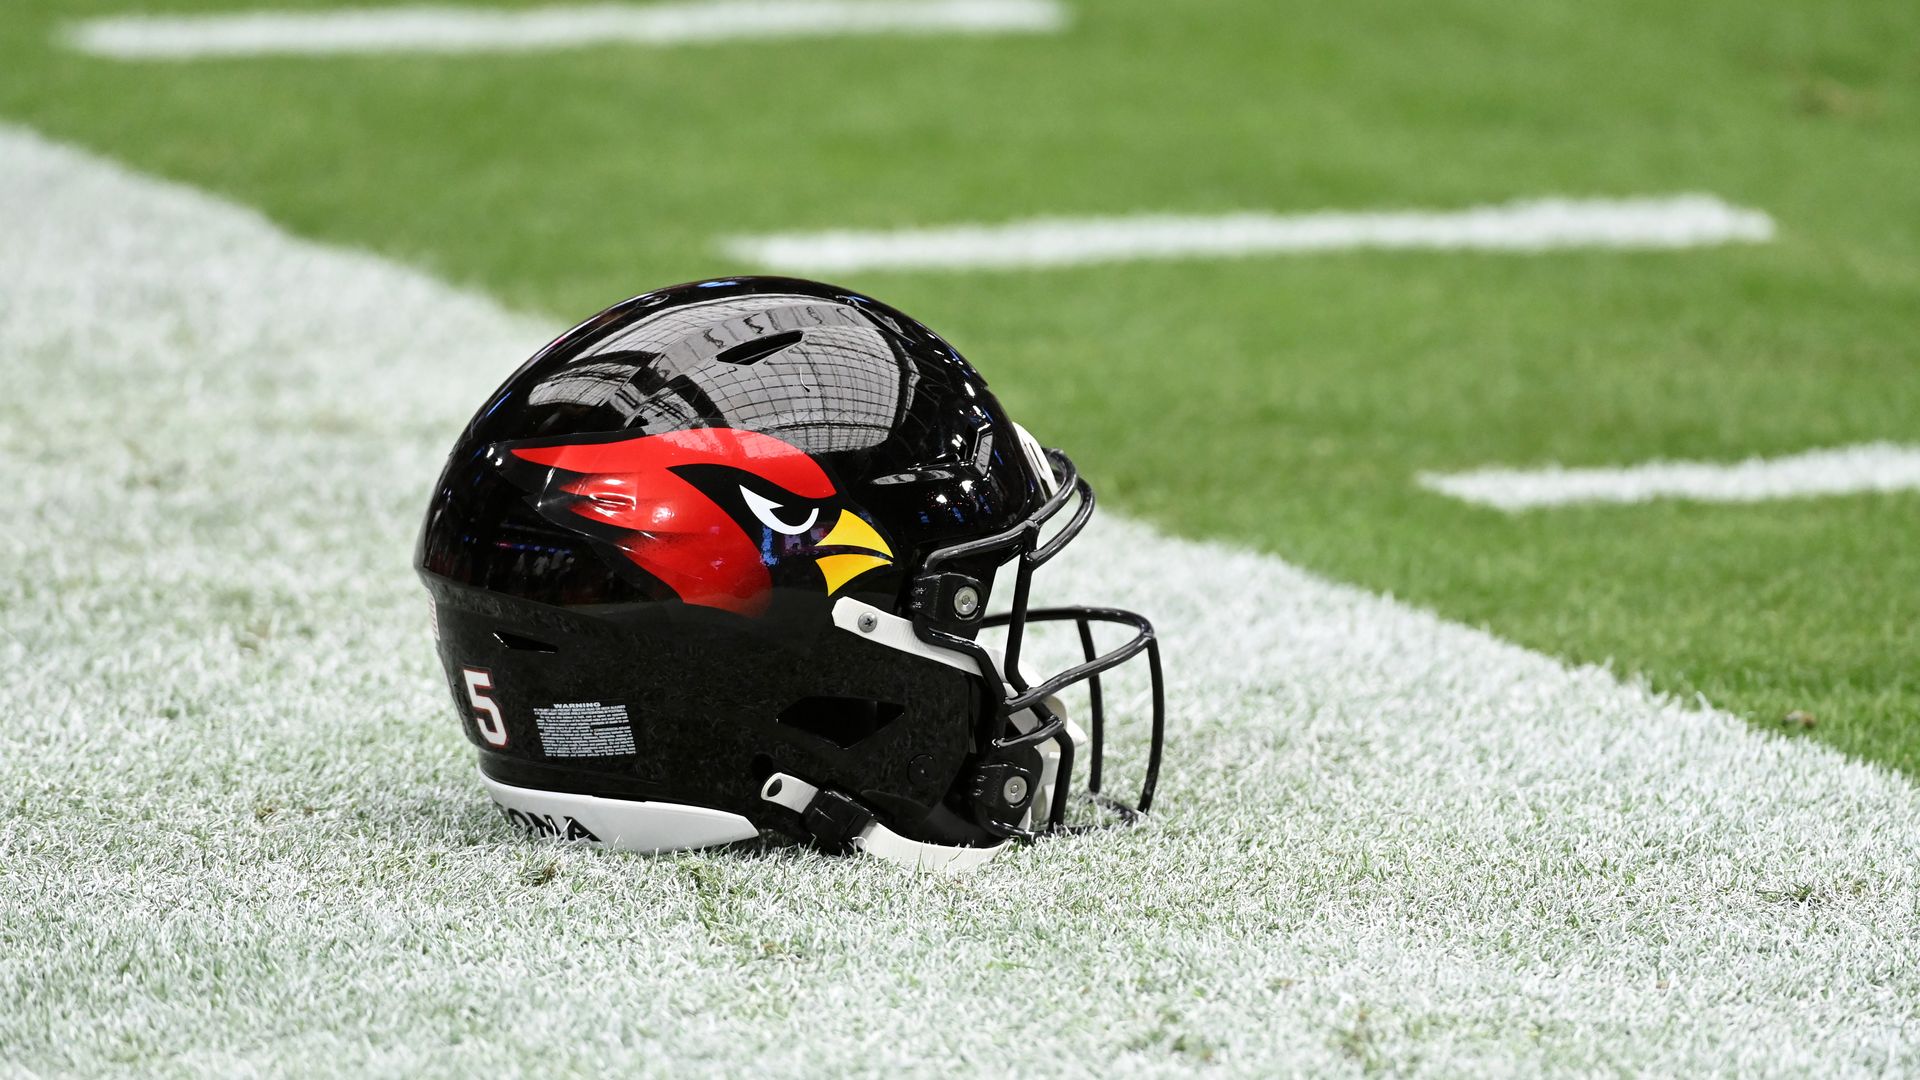 A Cardinals NFL helmet sitting on a sideline.